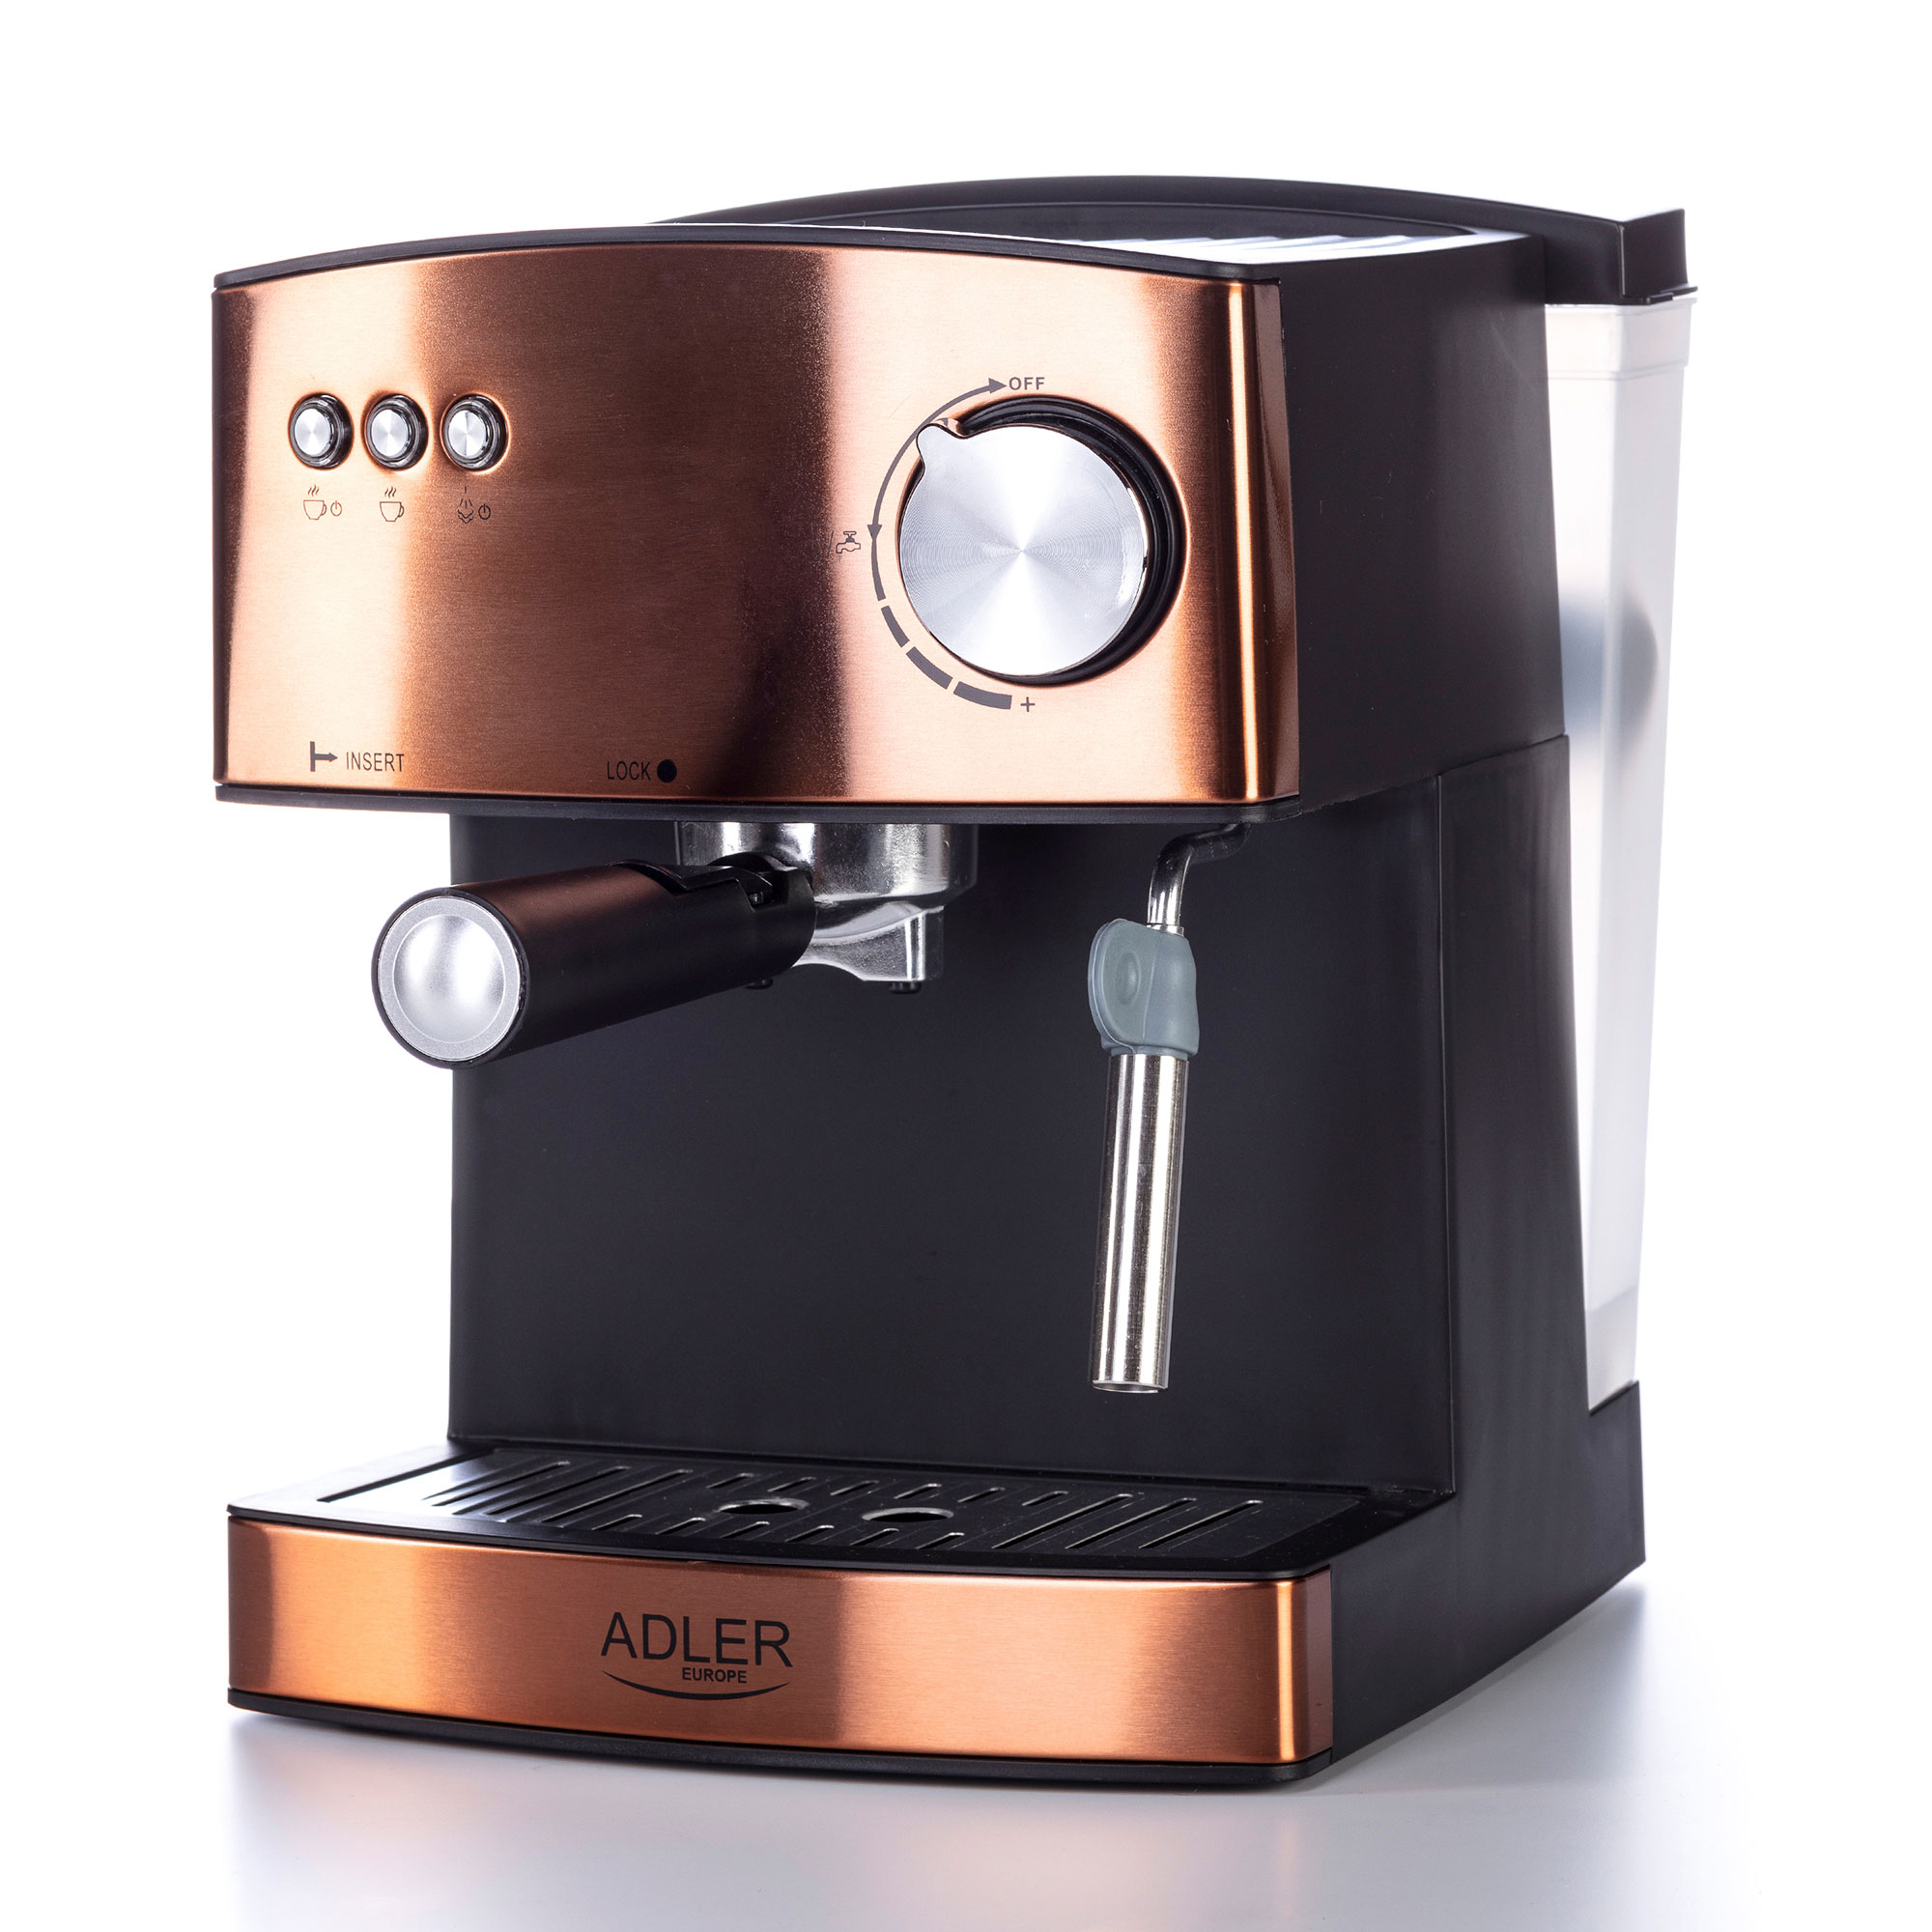 Adler 4404cr Cafetera espresso 15 16 para preparar latte y capuccino vaporizador espumar leche tazas color cobre 850w express manual brazo doble salida 850